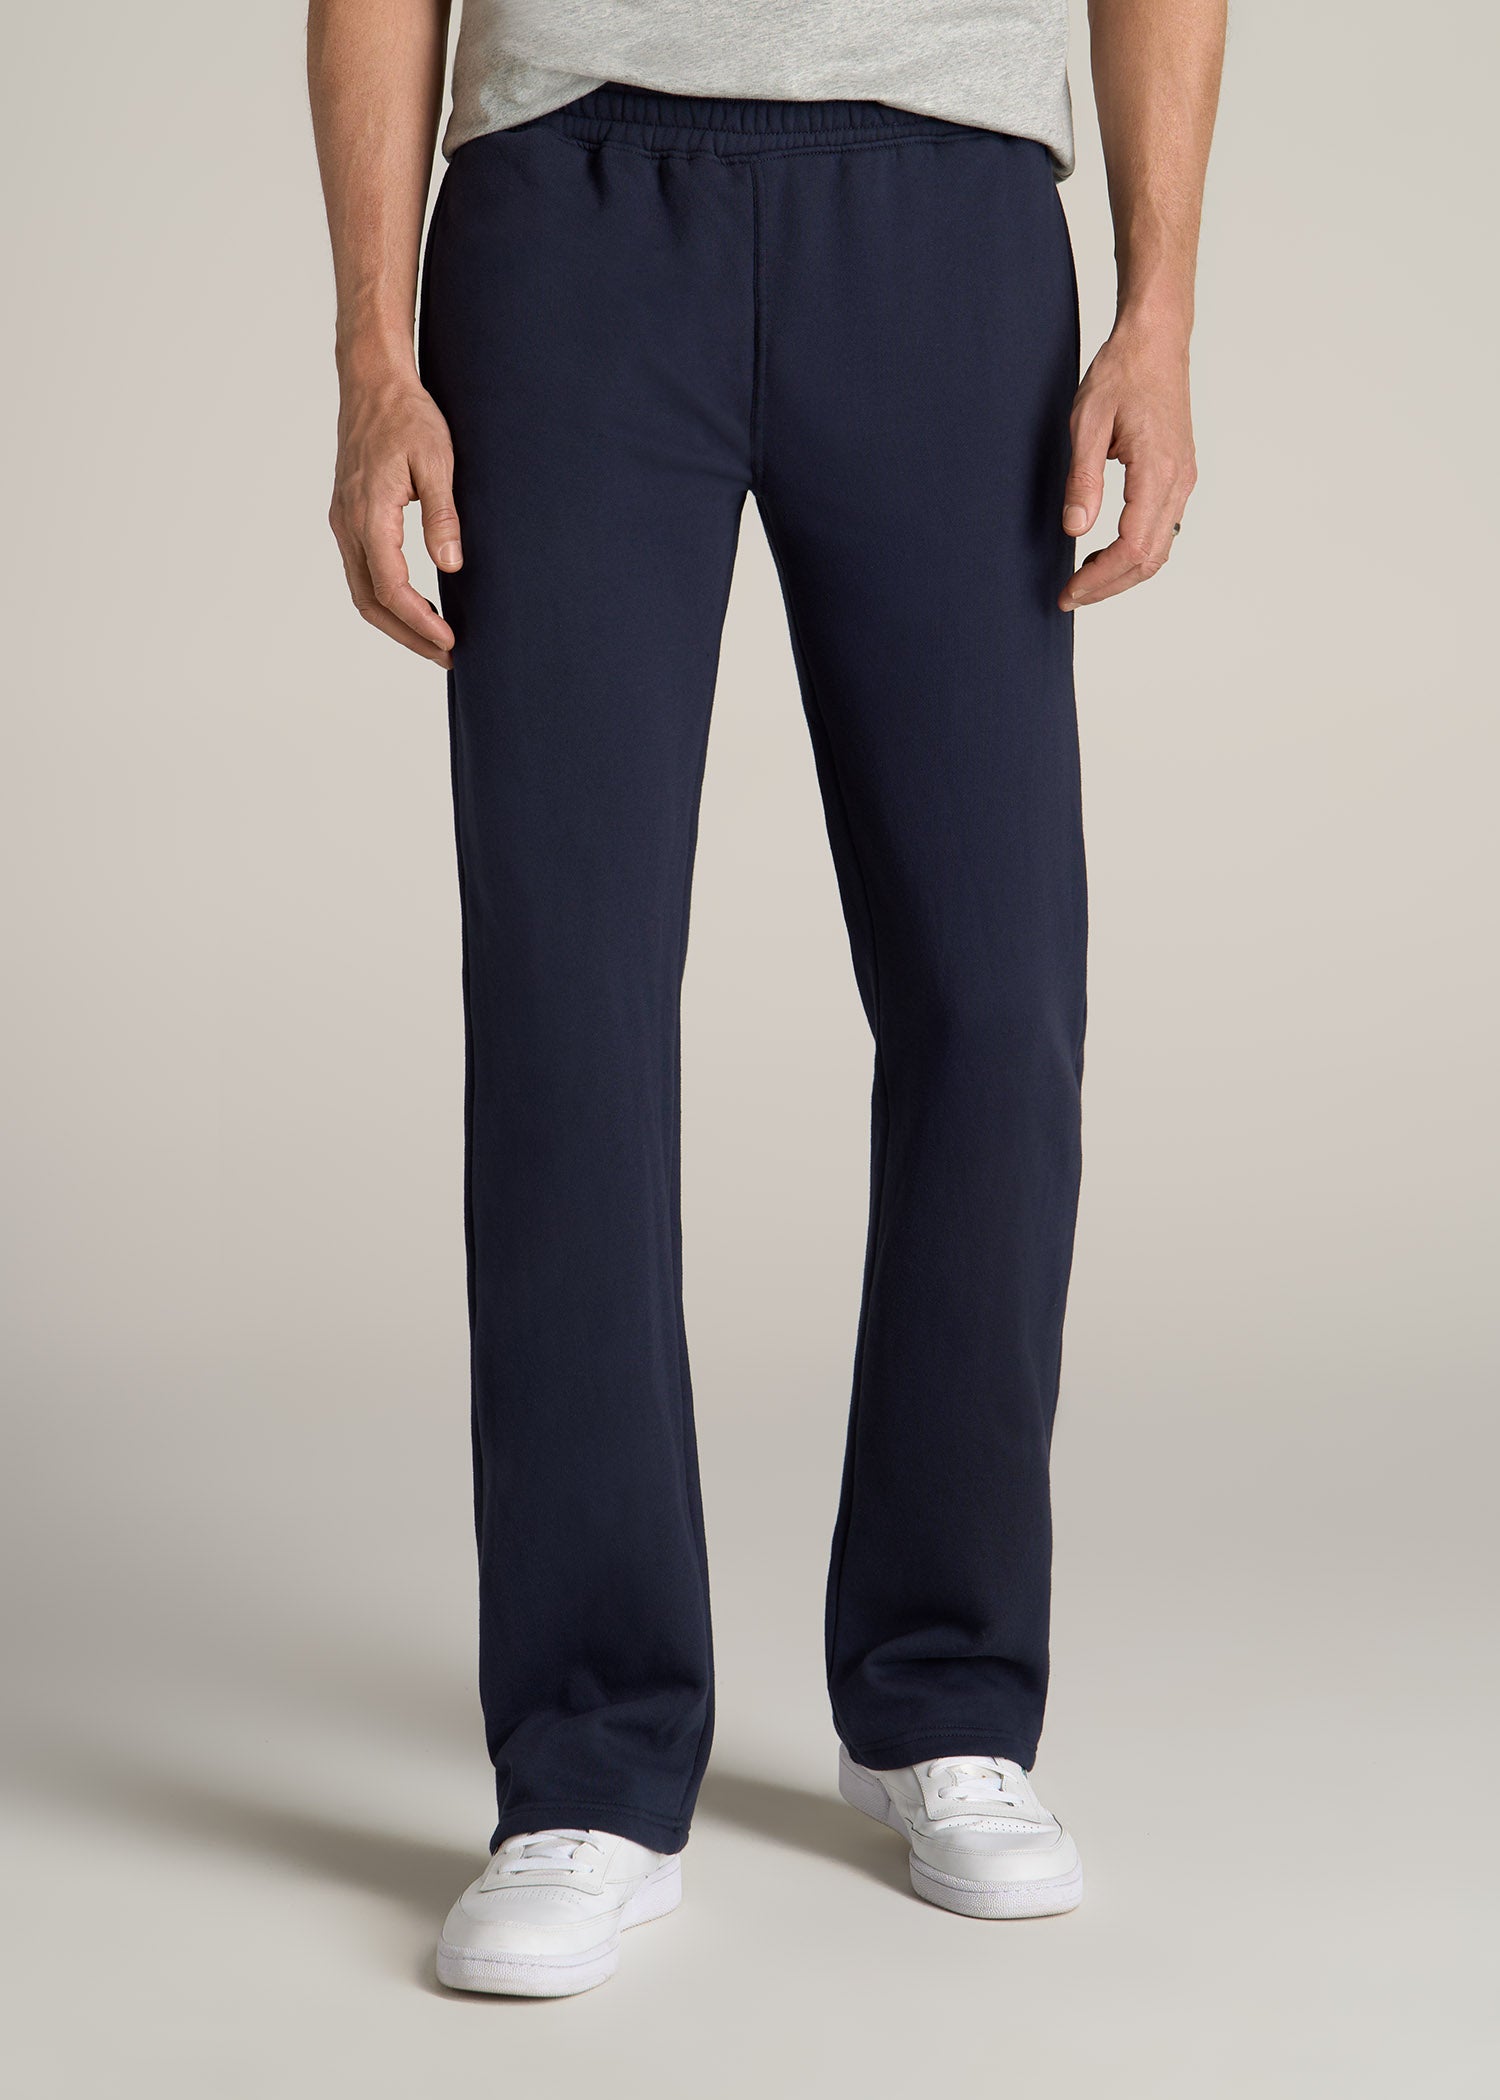 G Gradual Men's Sweatpants With Pockets Open Bottom Athletic Pants